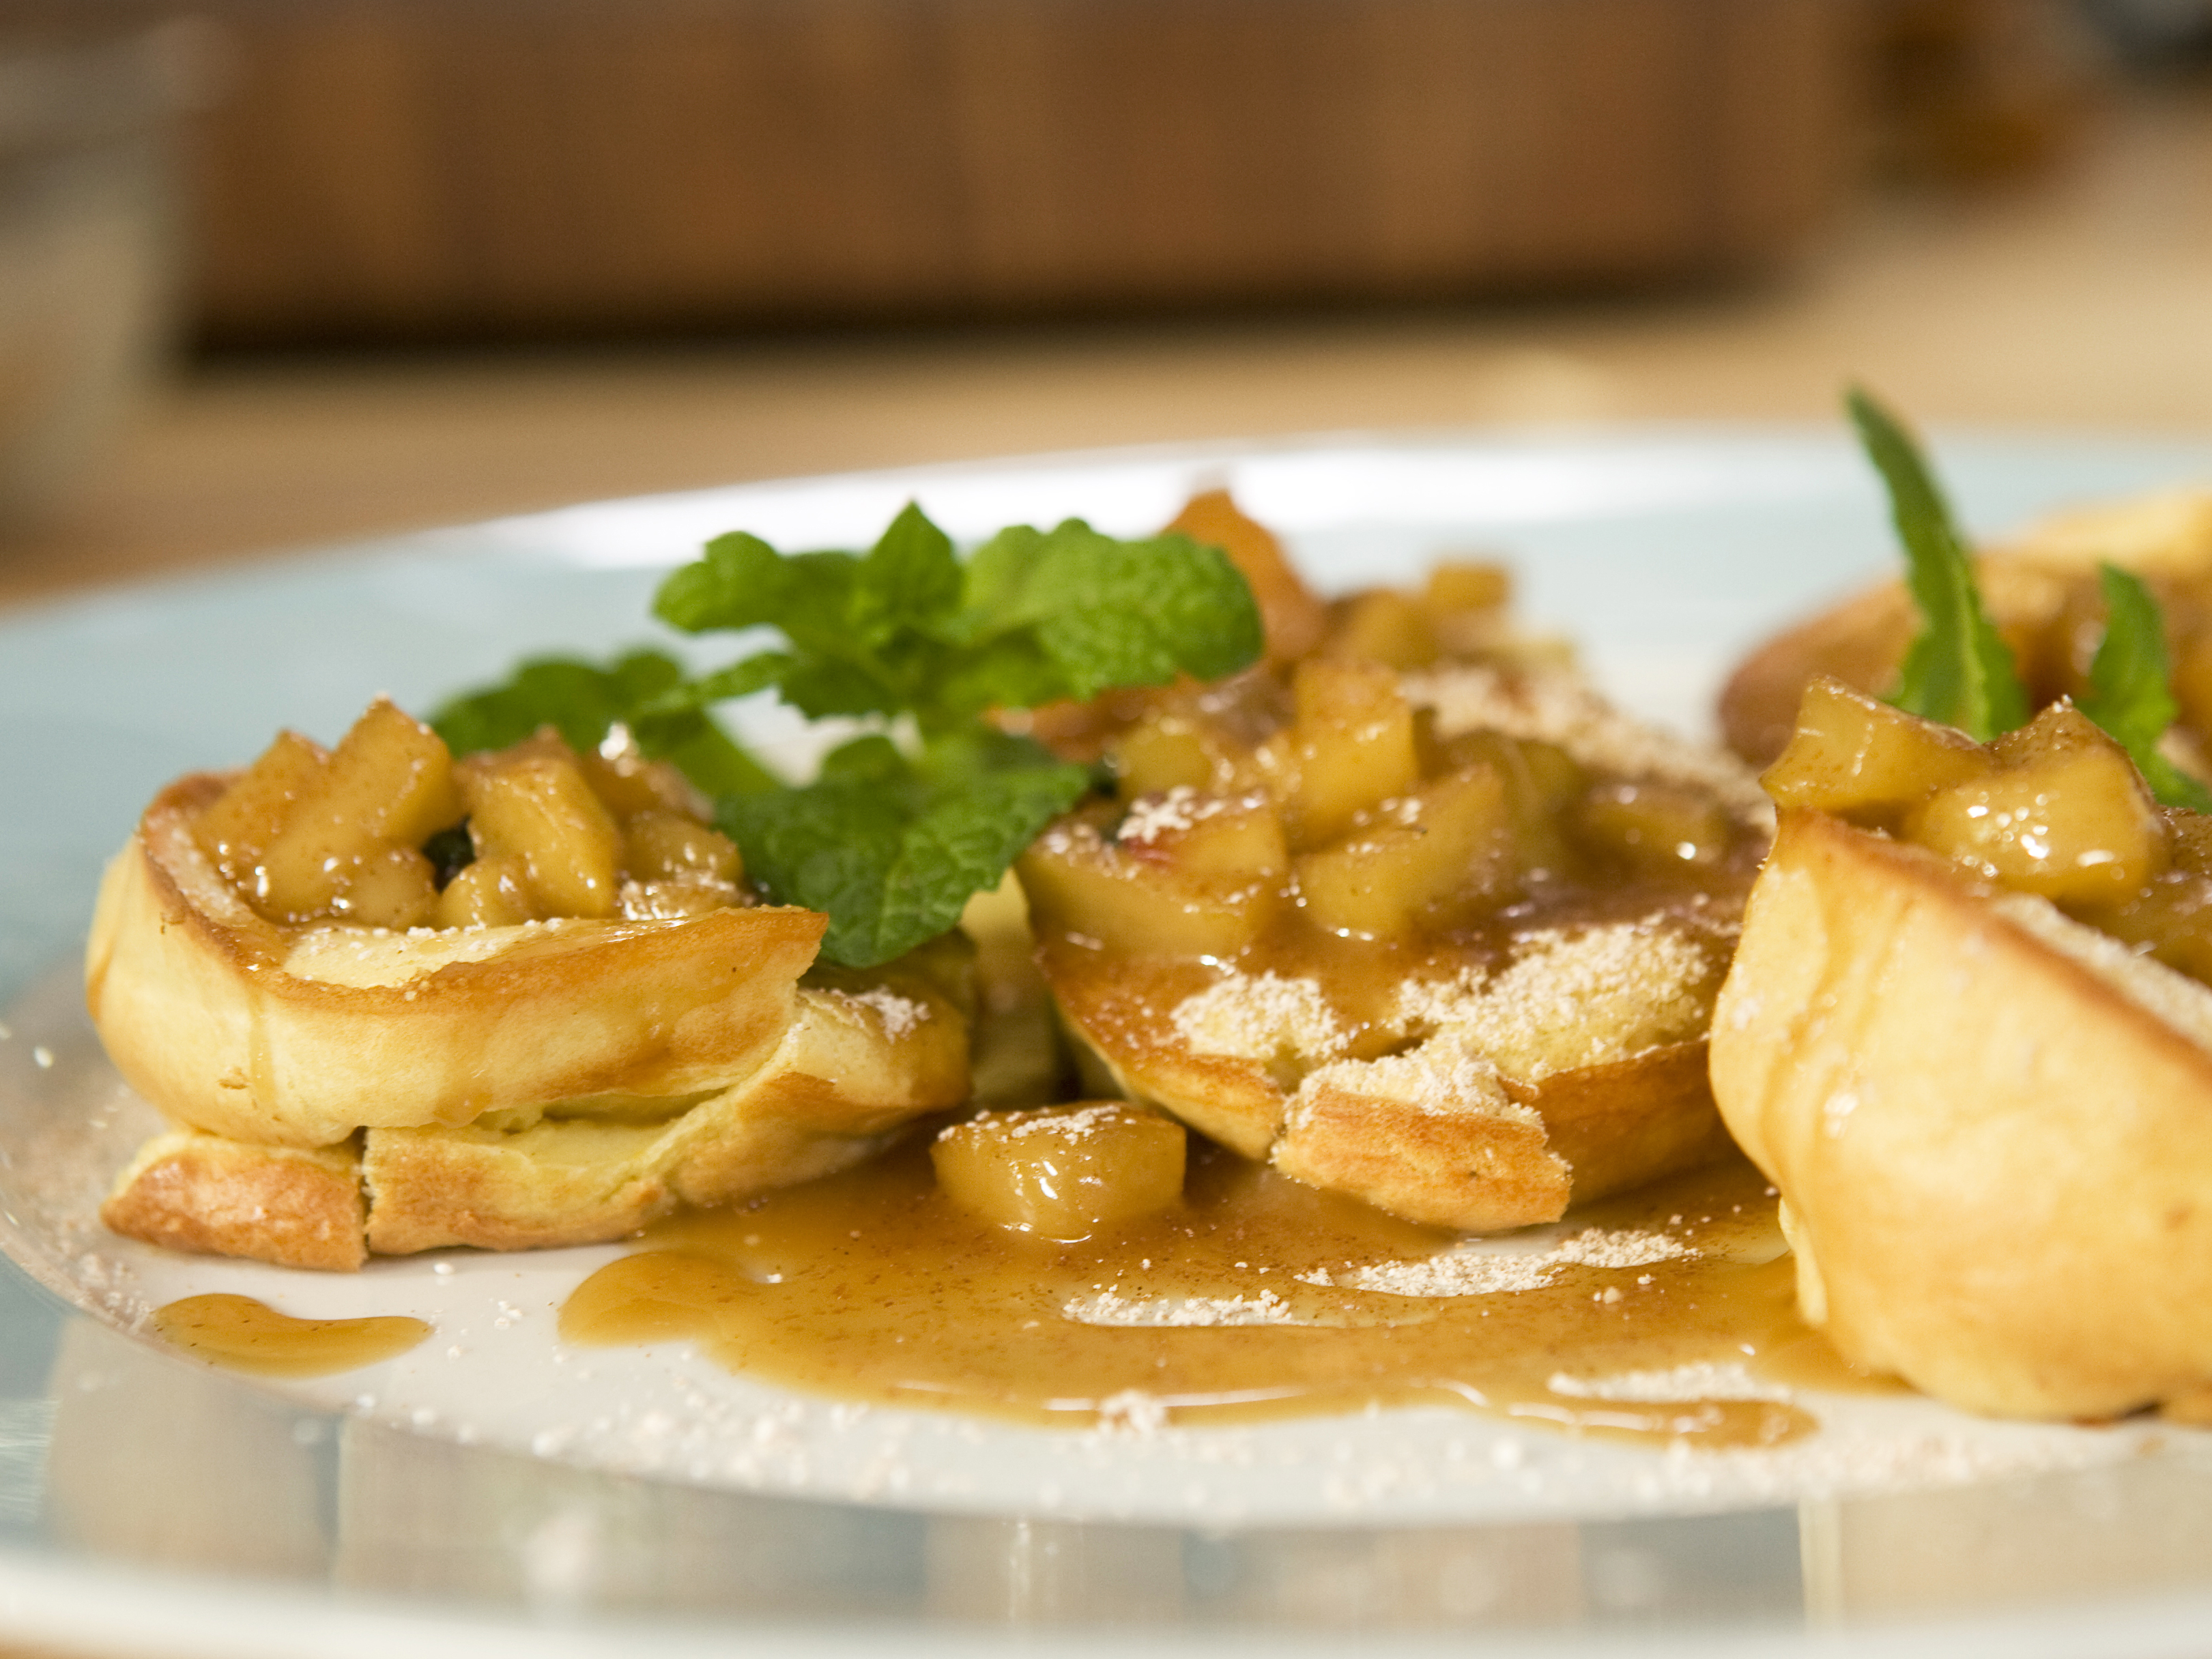 Apple Pancake Recipe in Mini Bundt Pans - Domestically Speaking